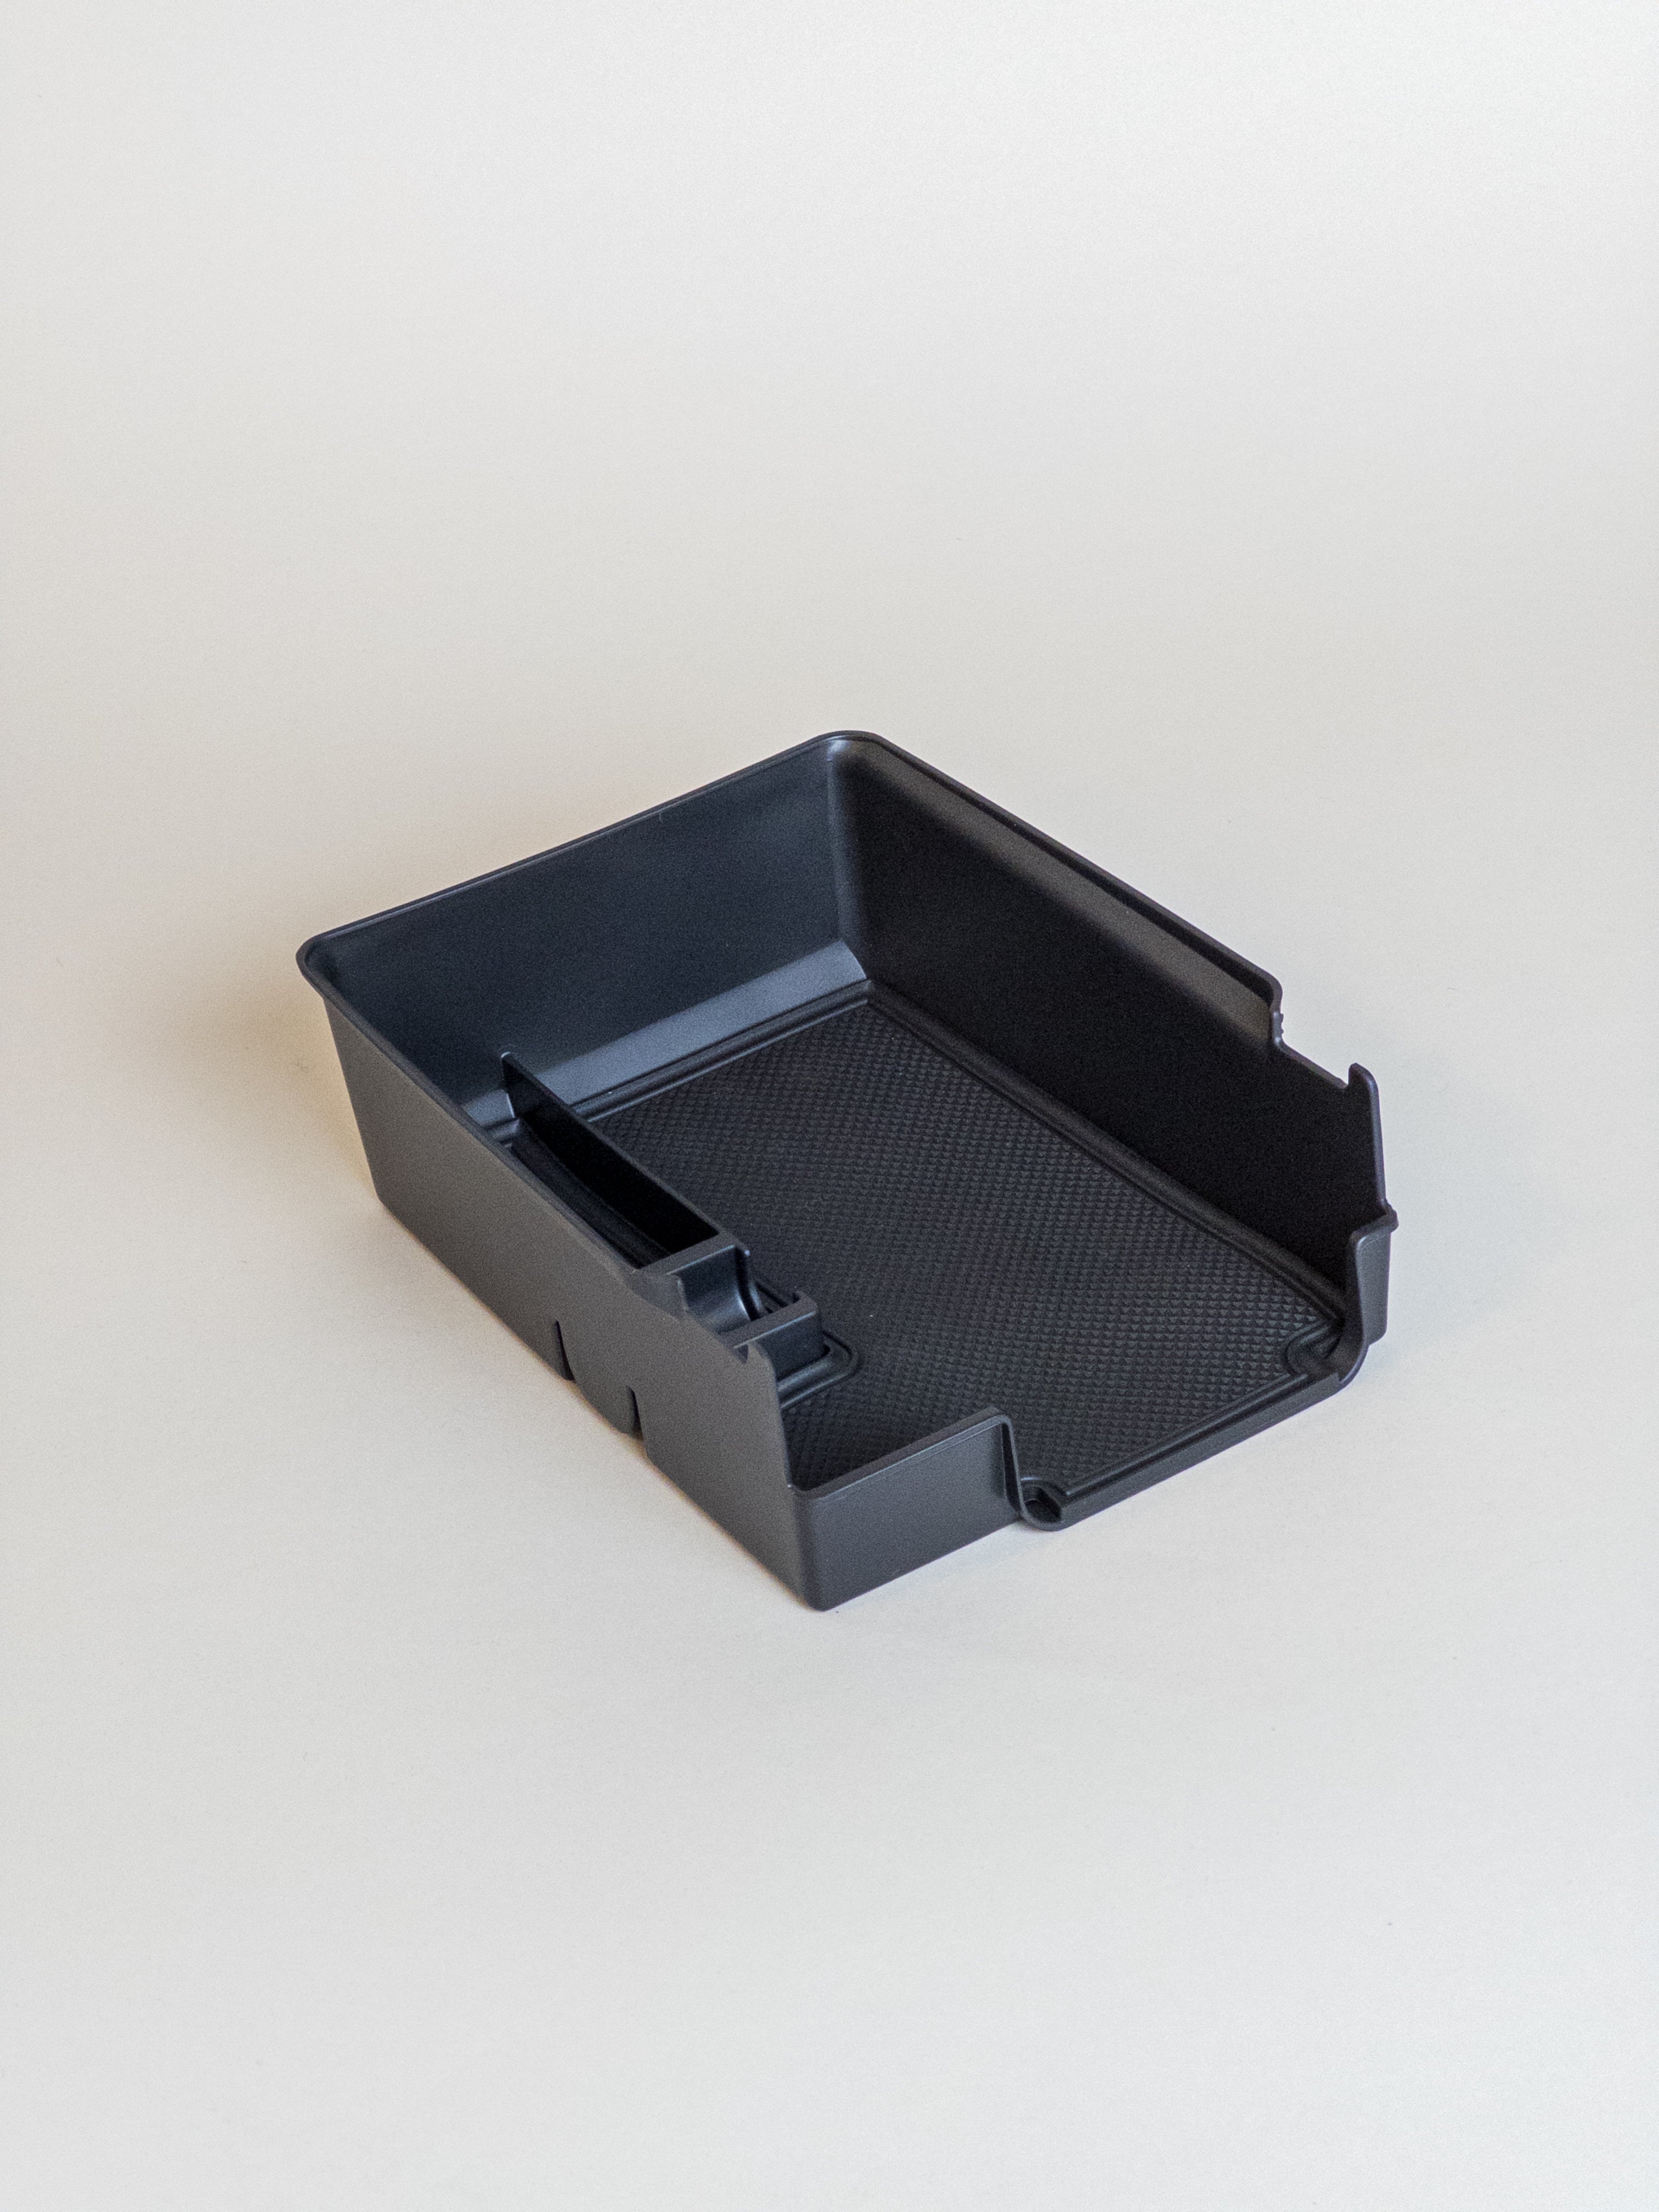 Model 3 & Y storage box armoured rubber